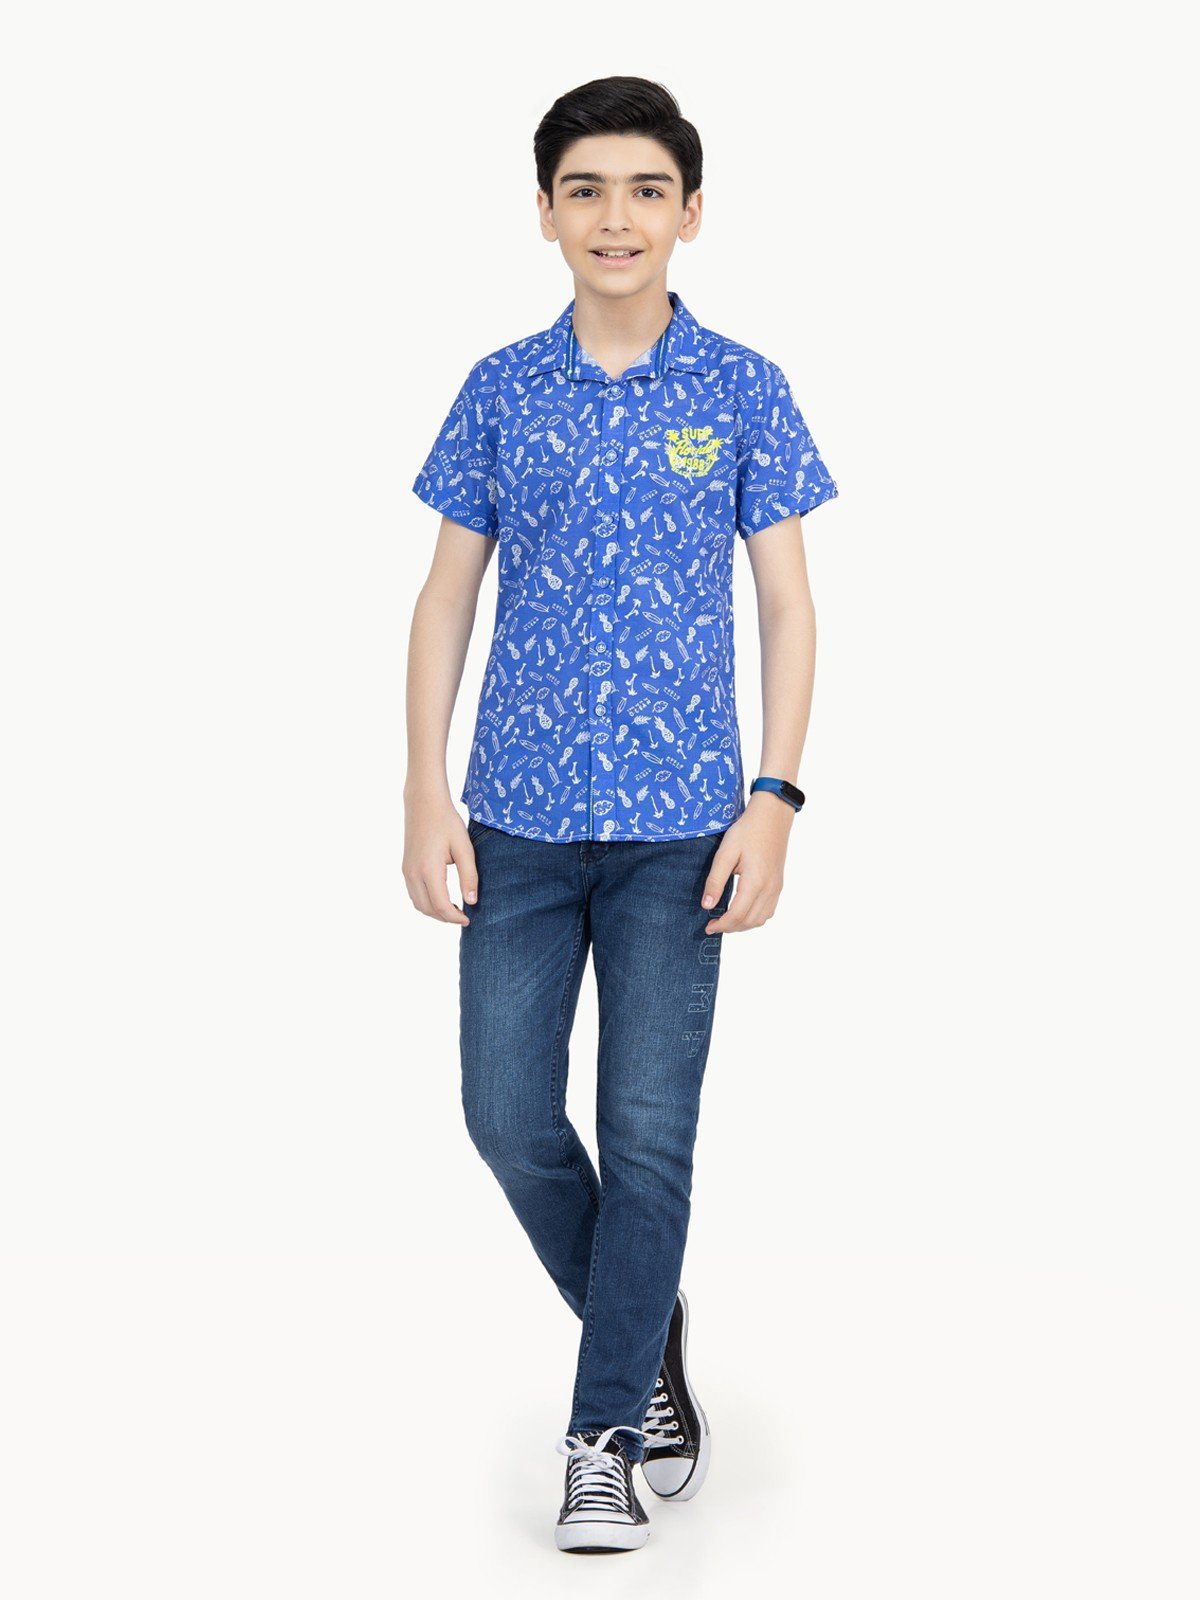 Boy's Royal Blue Shirt - EBTS22-27344